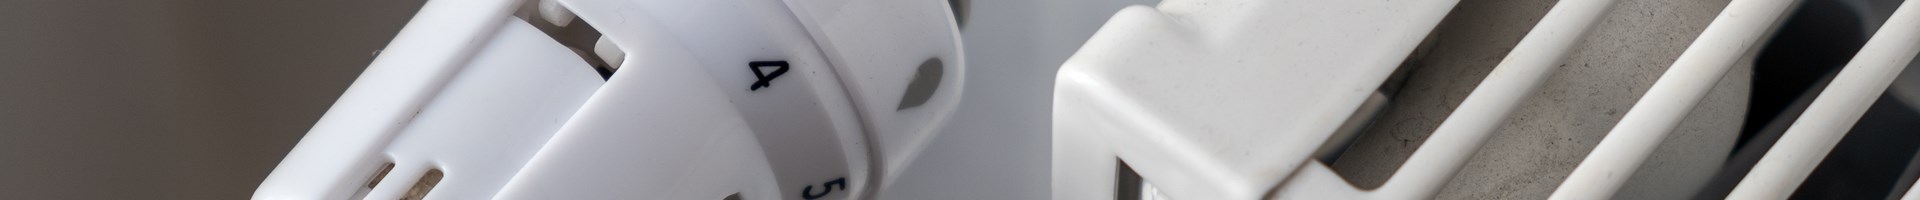 Closeup Of Heating Radiator Valve For Comfortable 2022 03 08 05 40 33 Utc